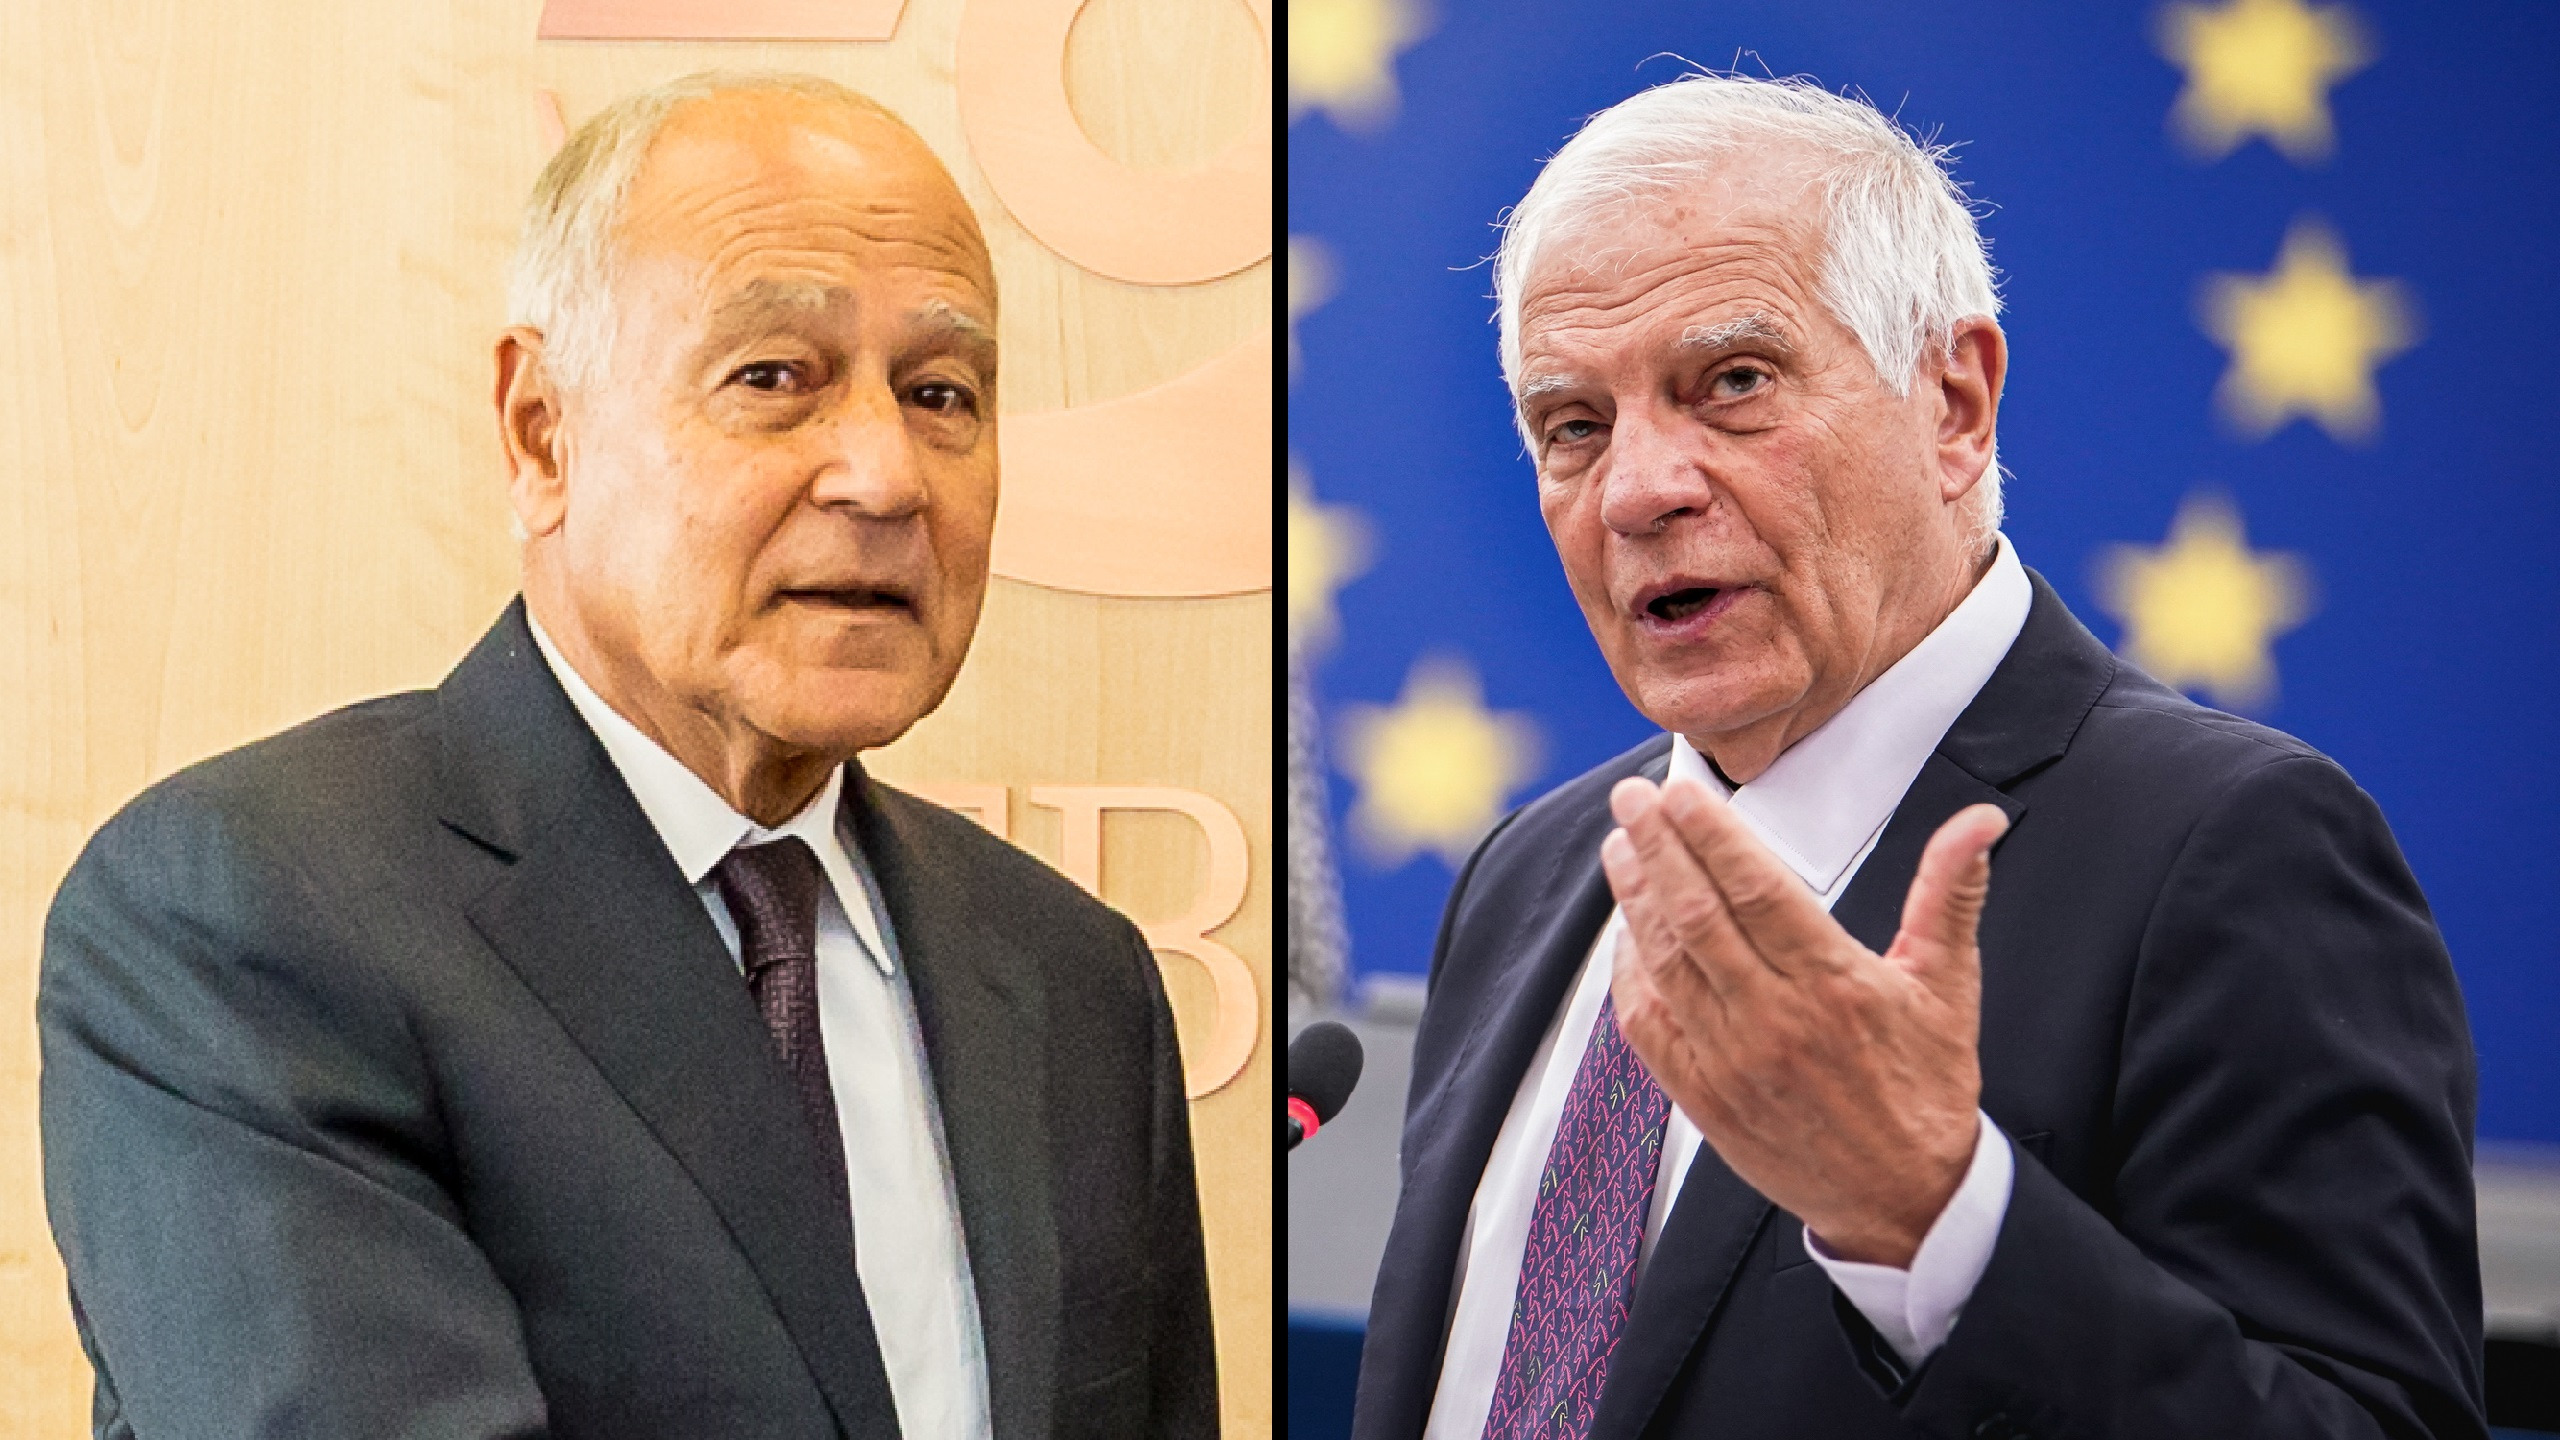 Arab League, EU Leaders Confer on Middle East Peace, Migration Issues